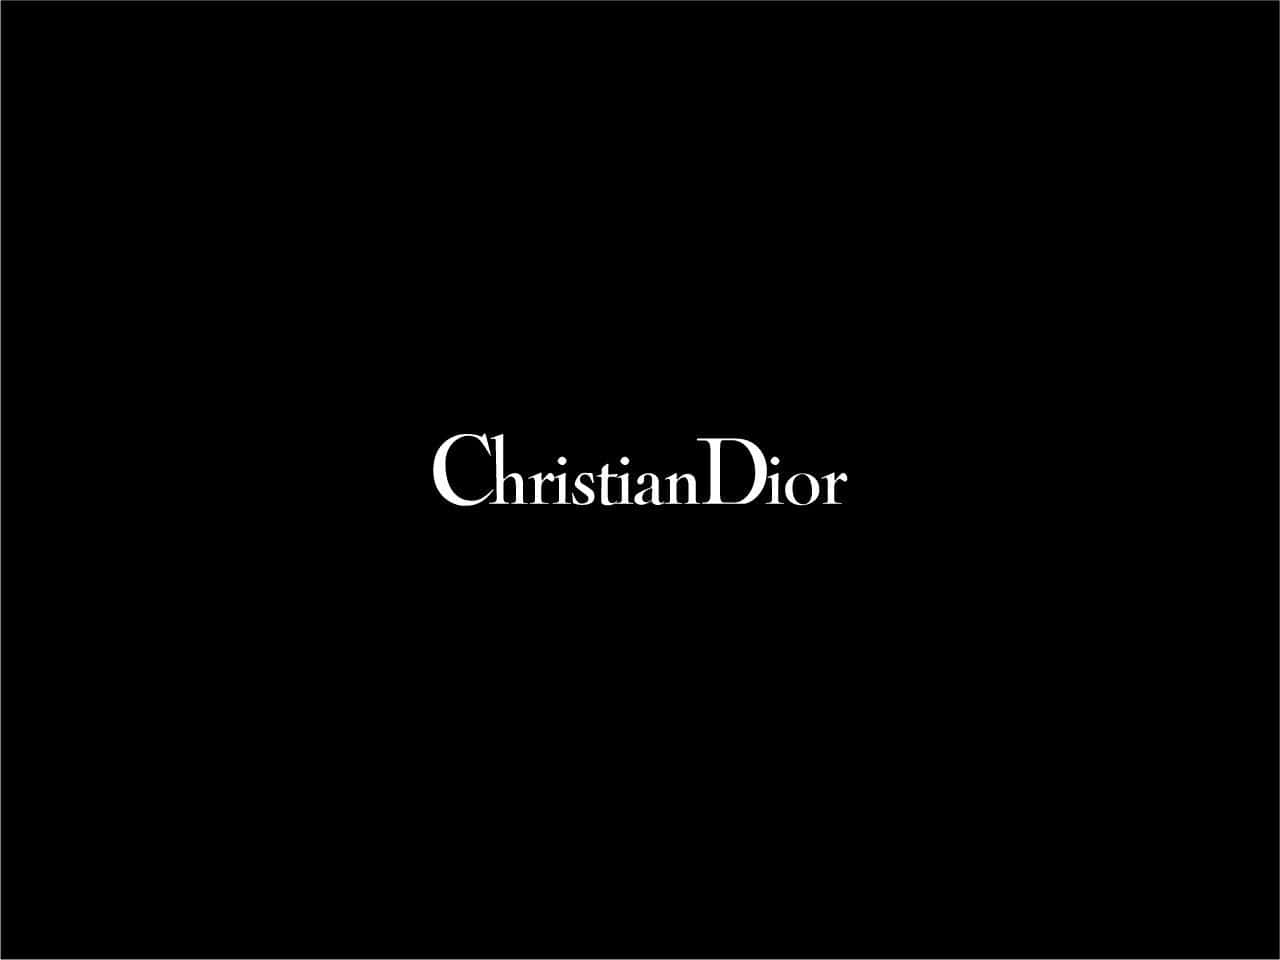 Christiandiors Logotyp På En Svart Bakgrund